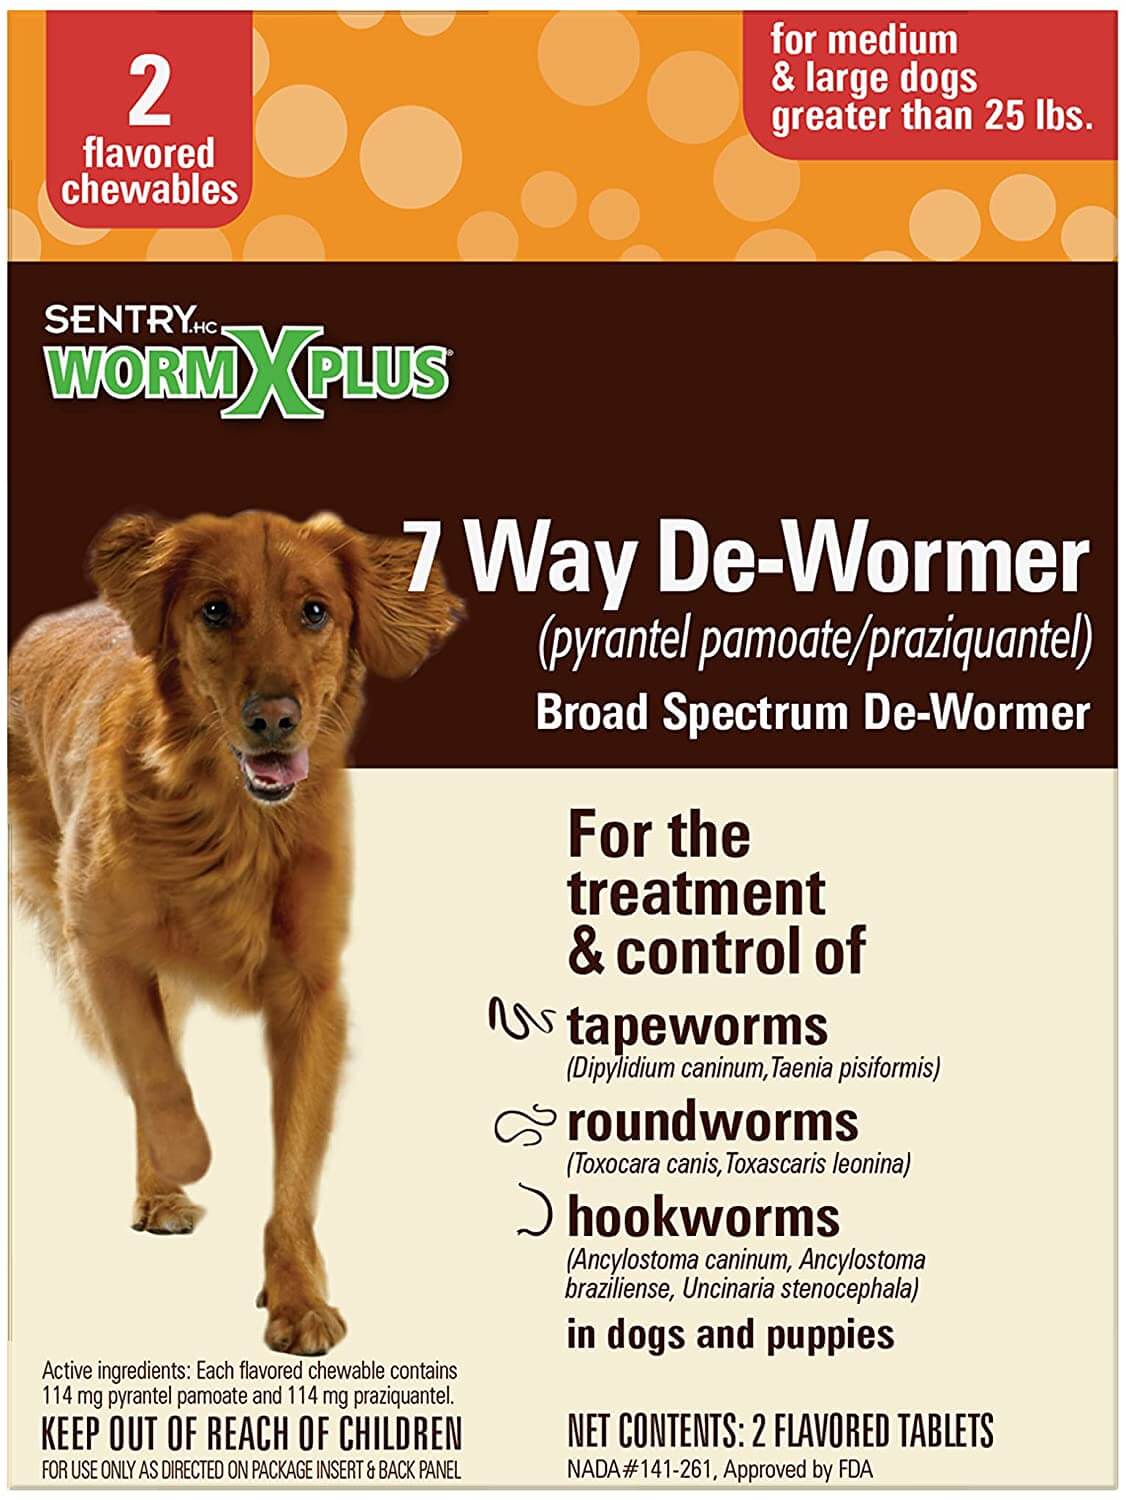 SENTRY Pet Care 7 Way De-Wormer for Dogs